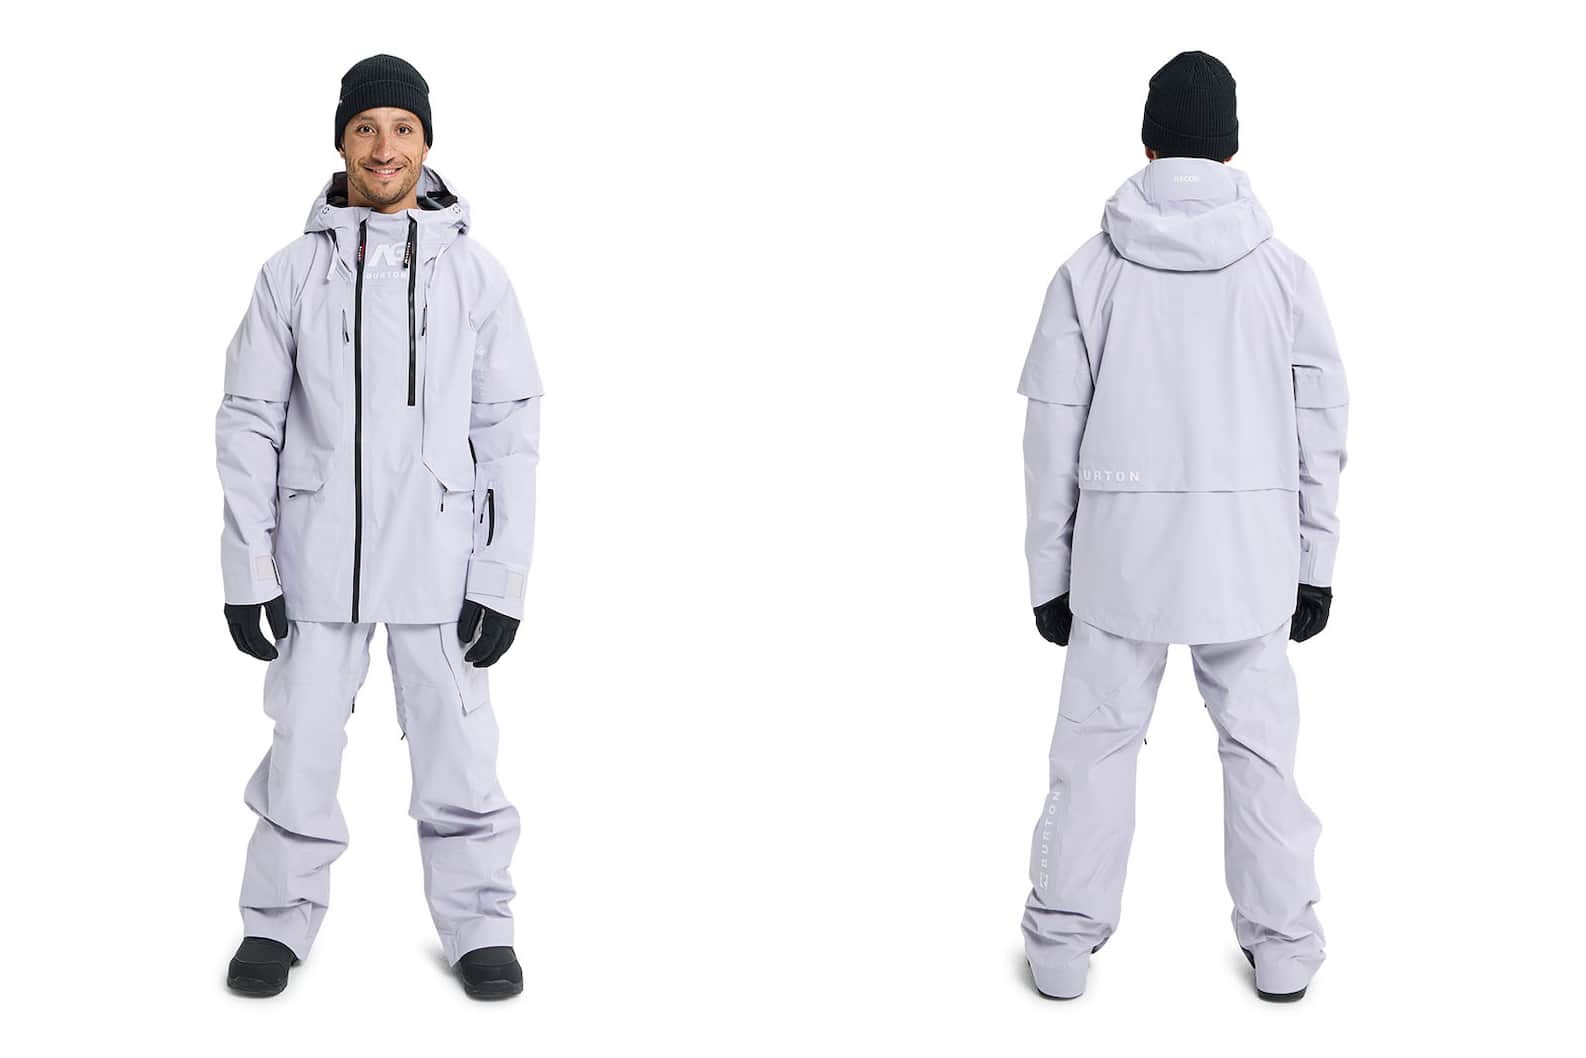 Burton's Winter Jacket Length & Outerwear Fit Guide | Burton Snowboards